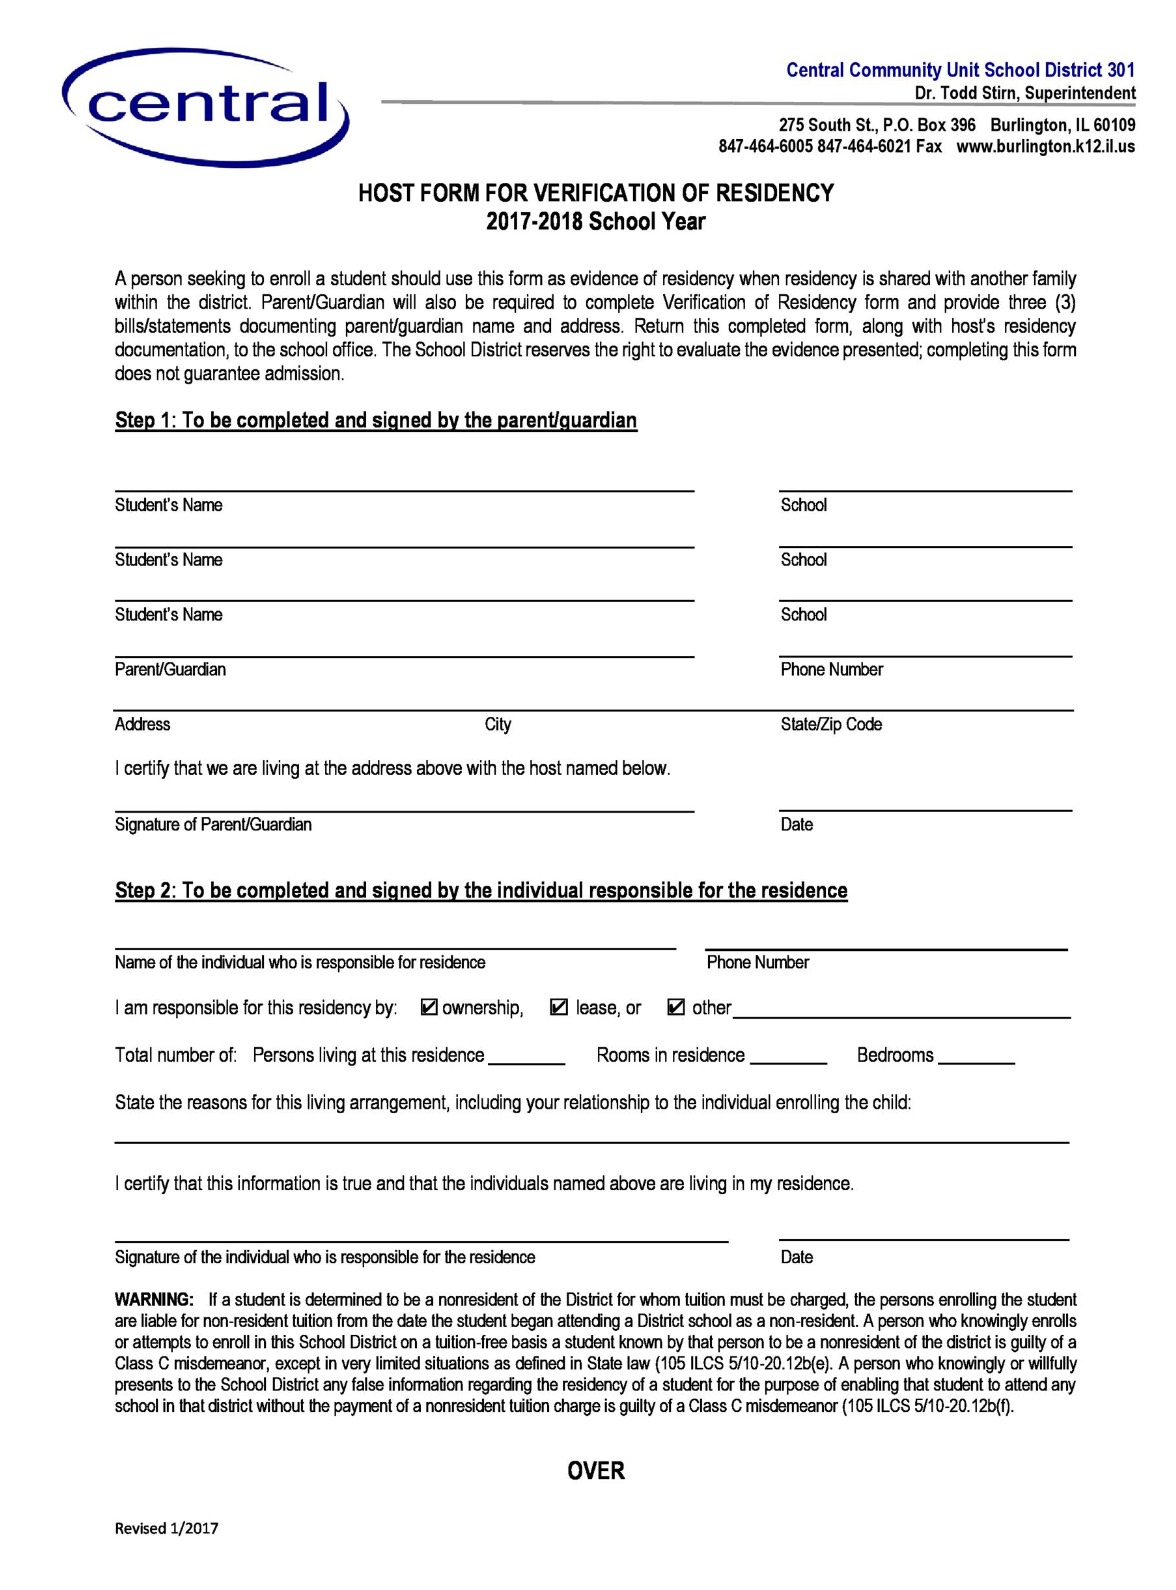 sample proof of residency form